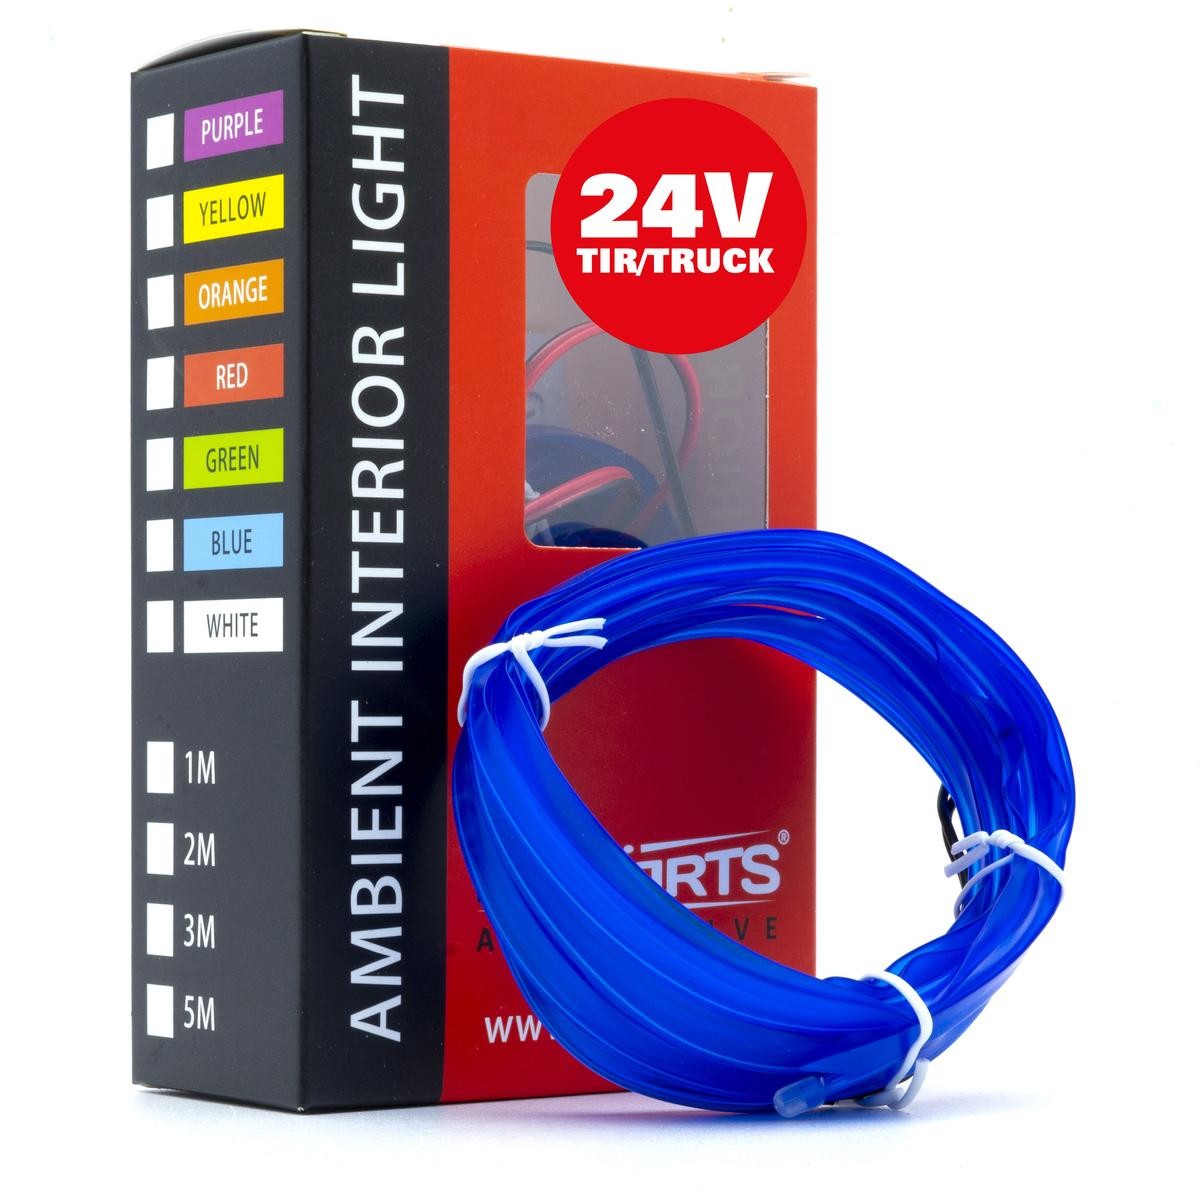 EINPARTS Interior Light EPAL3M BLUE 24V buy